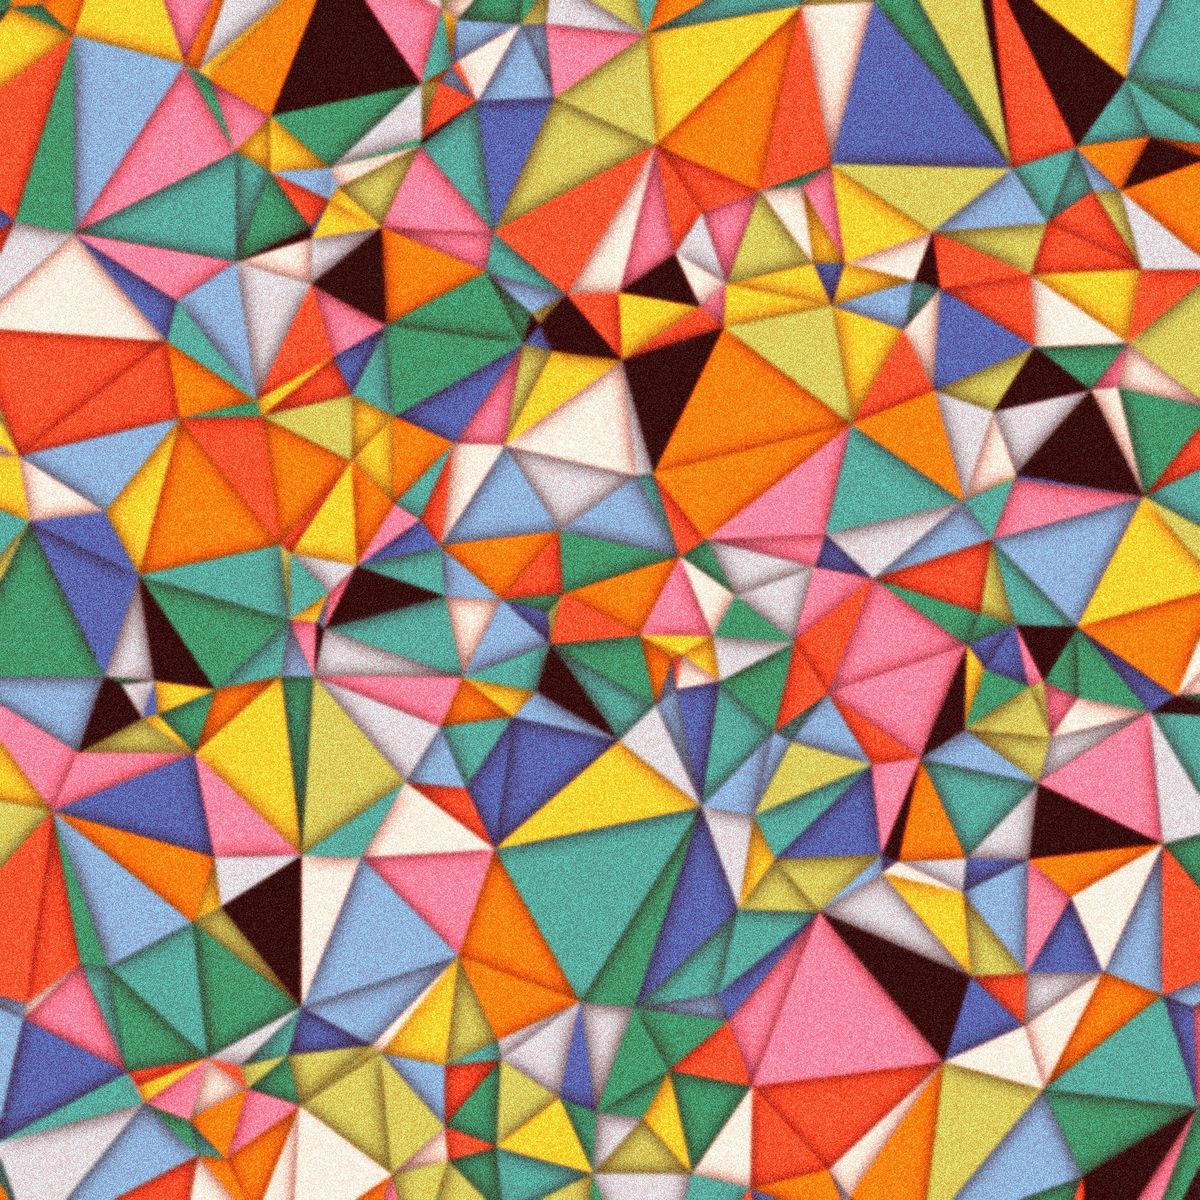 Bowyer-Watson Algorithm for Delaunay Triangulation